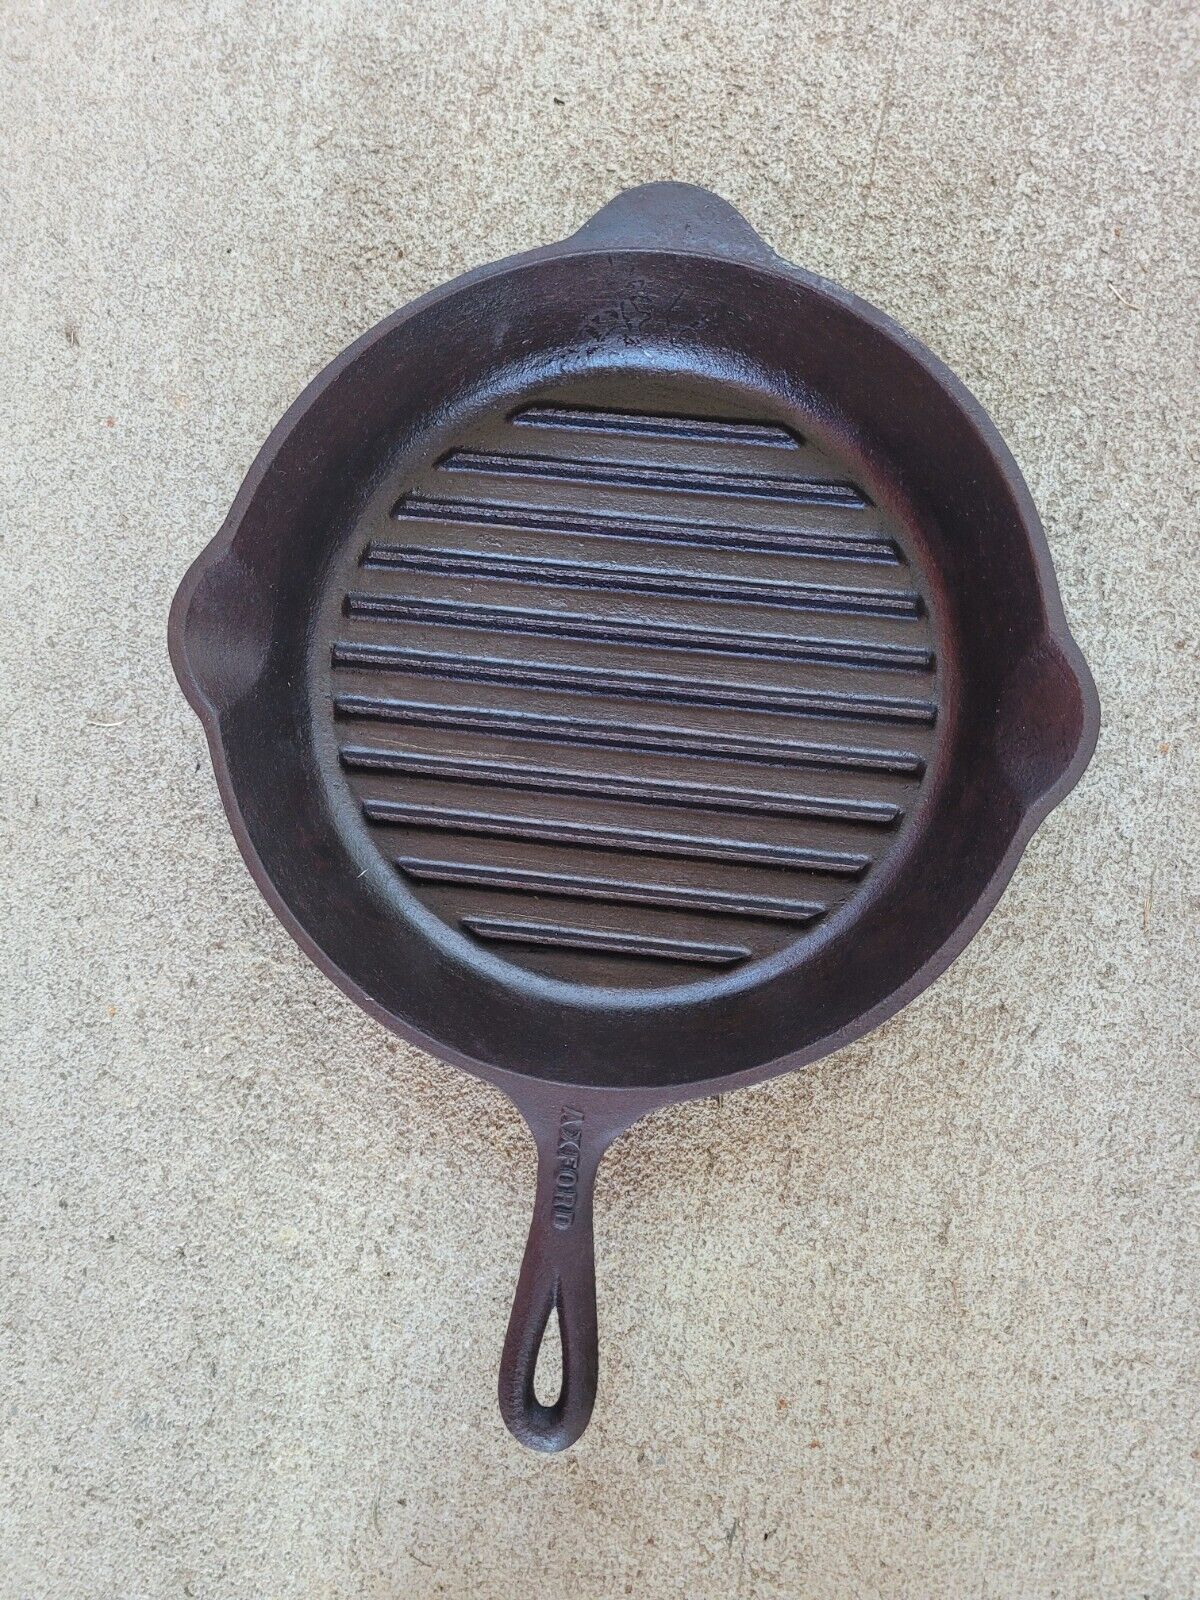 Vintage Axford Broiler Cast Iron Grill Pan Broil-Rite  Pan